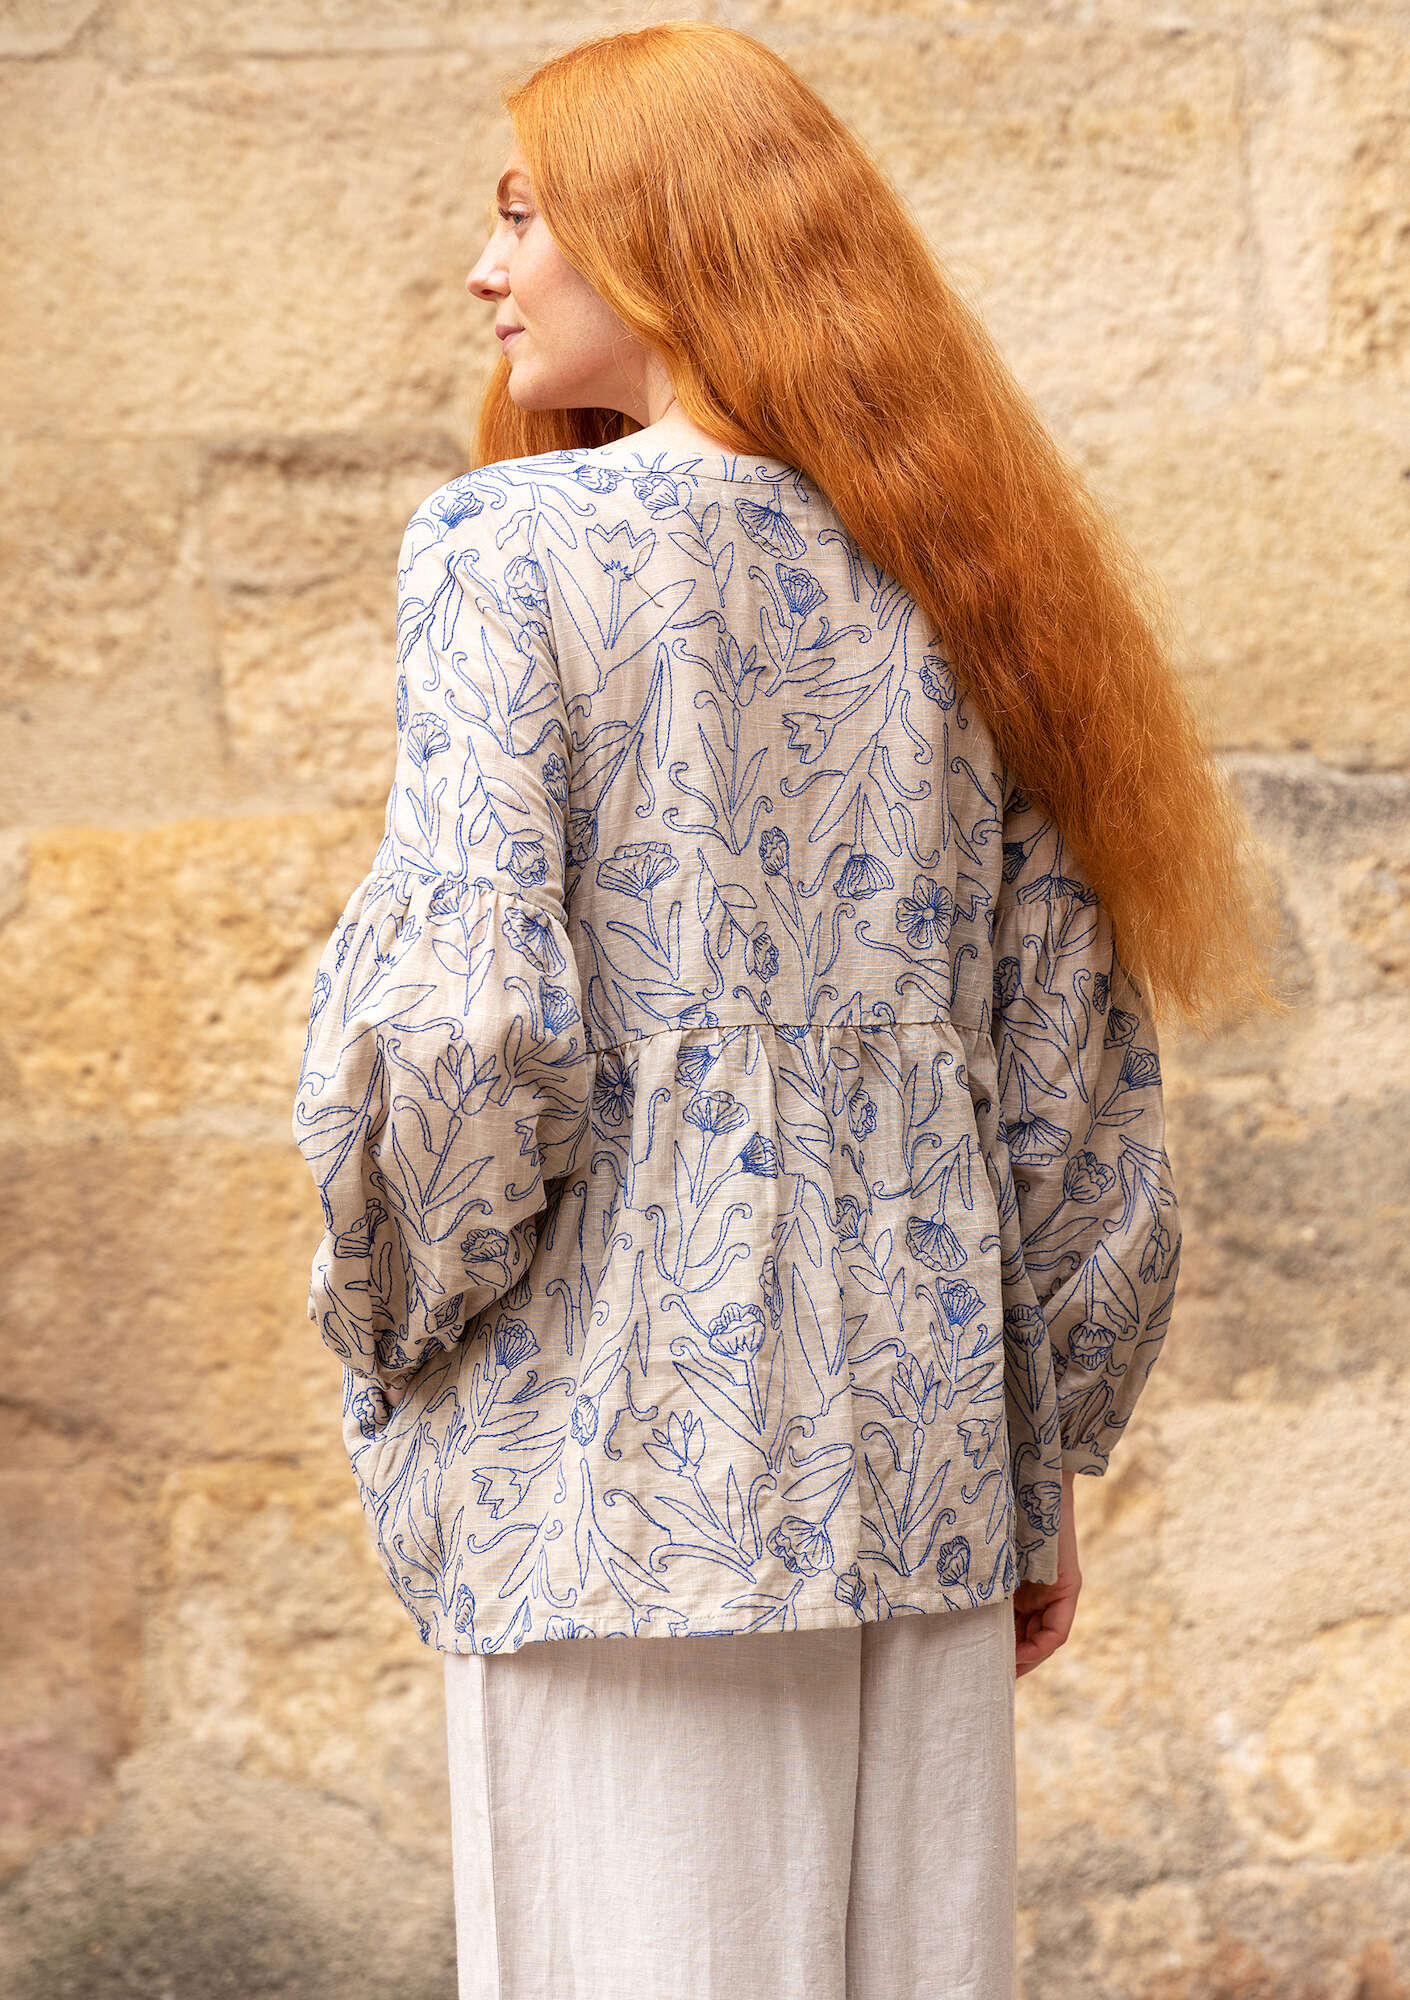 “Blomen” artist’s blouse in organic cotton dark nature